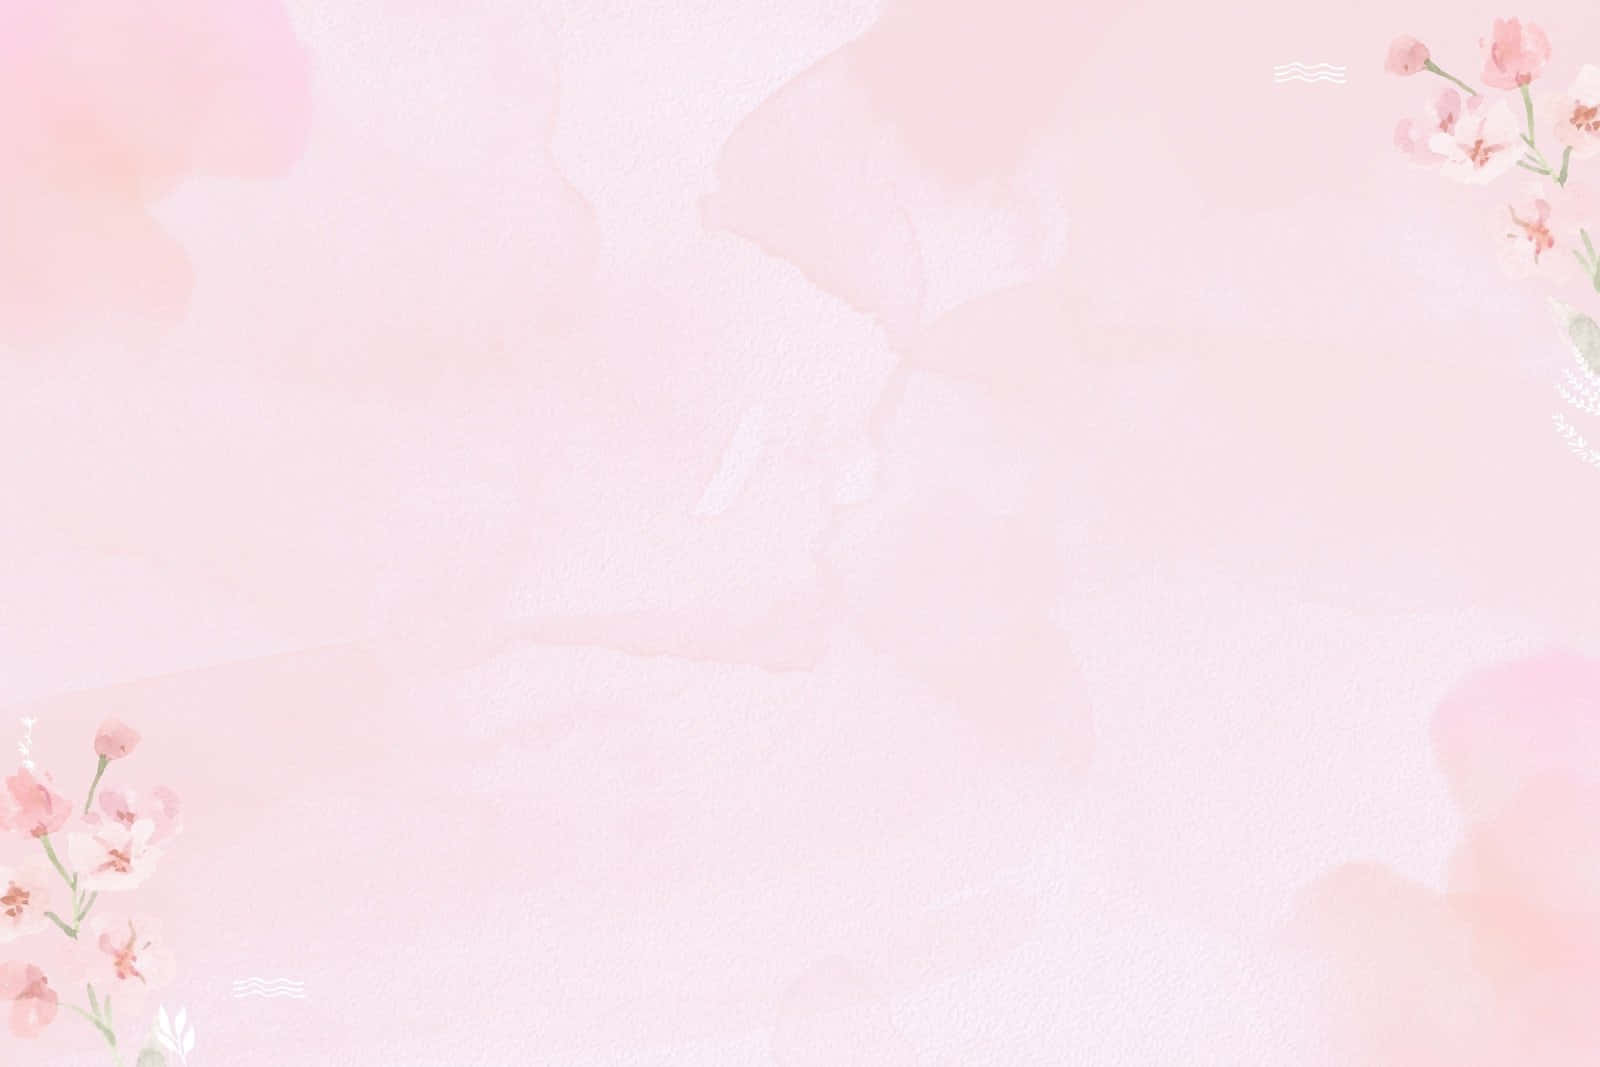 light pink background wallpaper